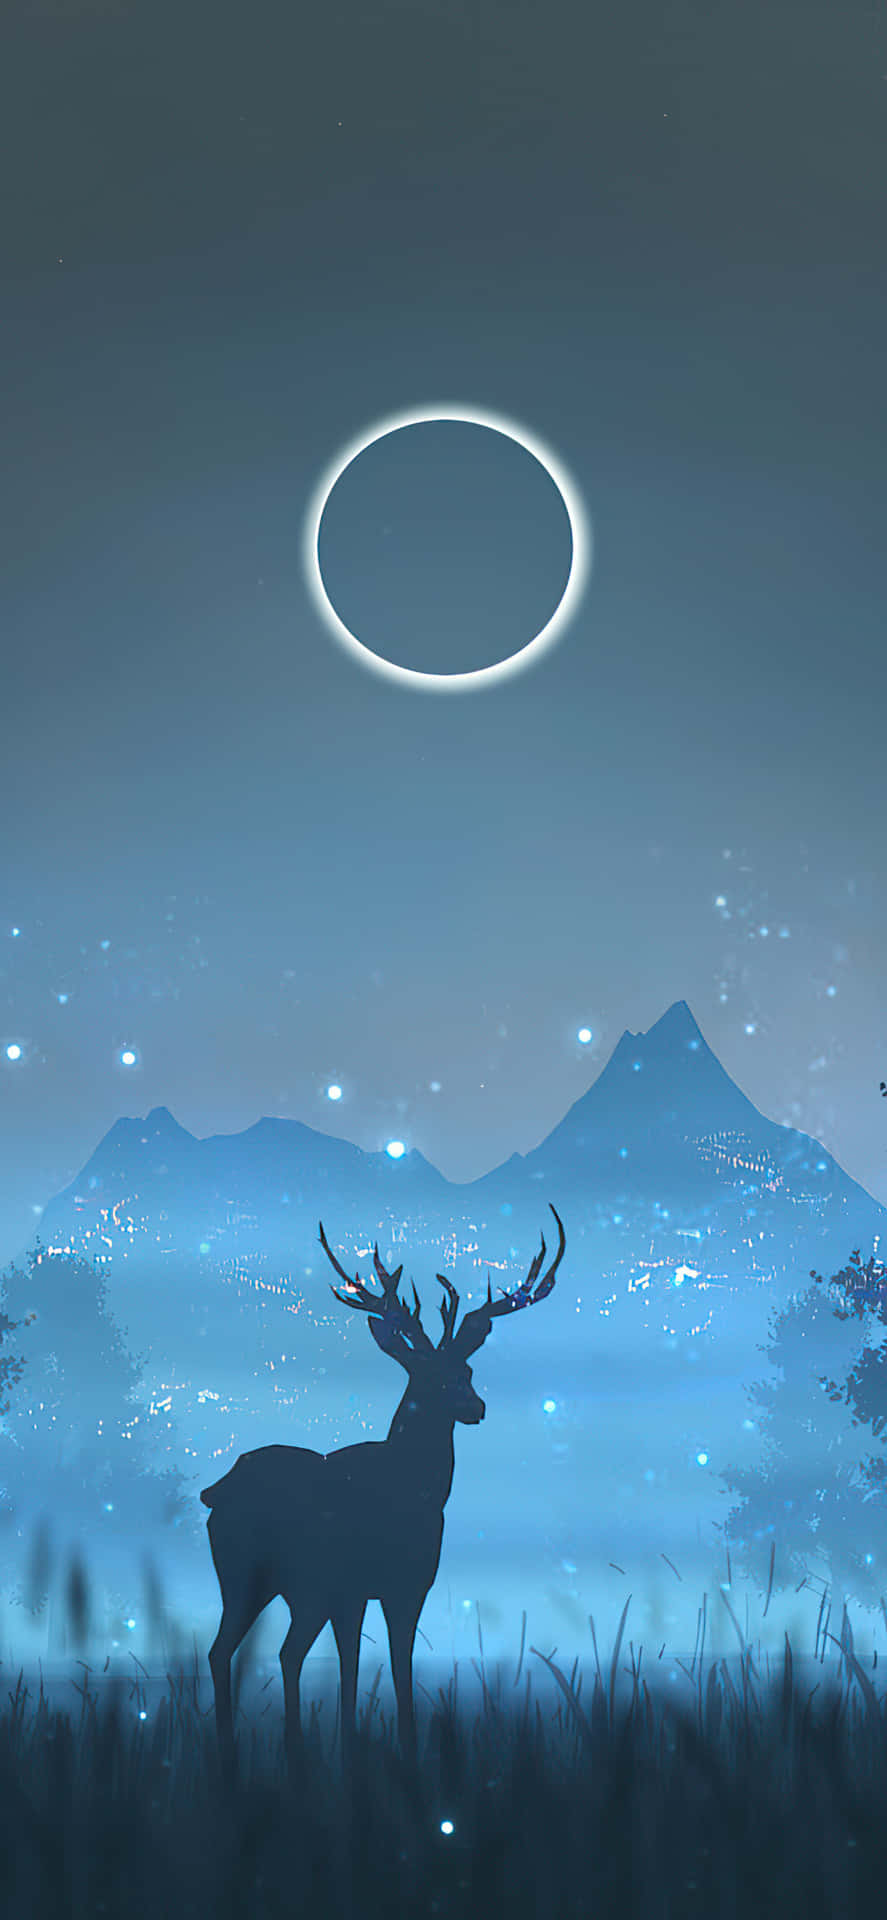 Happy Reindeer in a Winter Wonderland